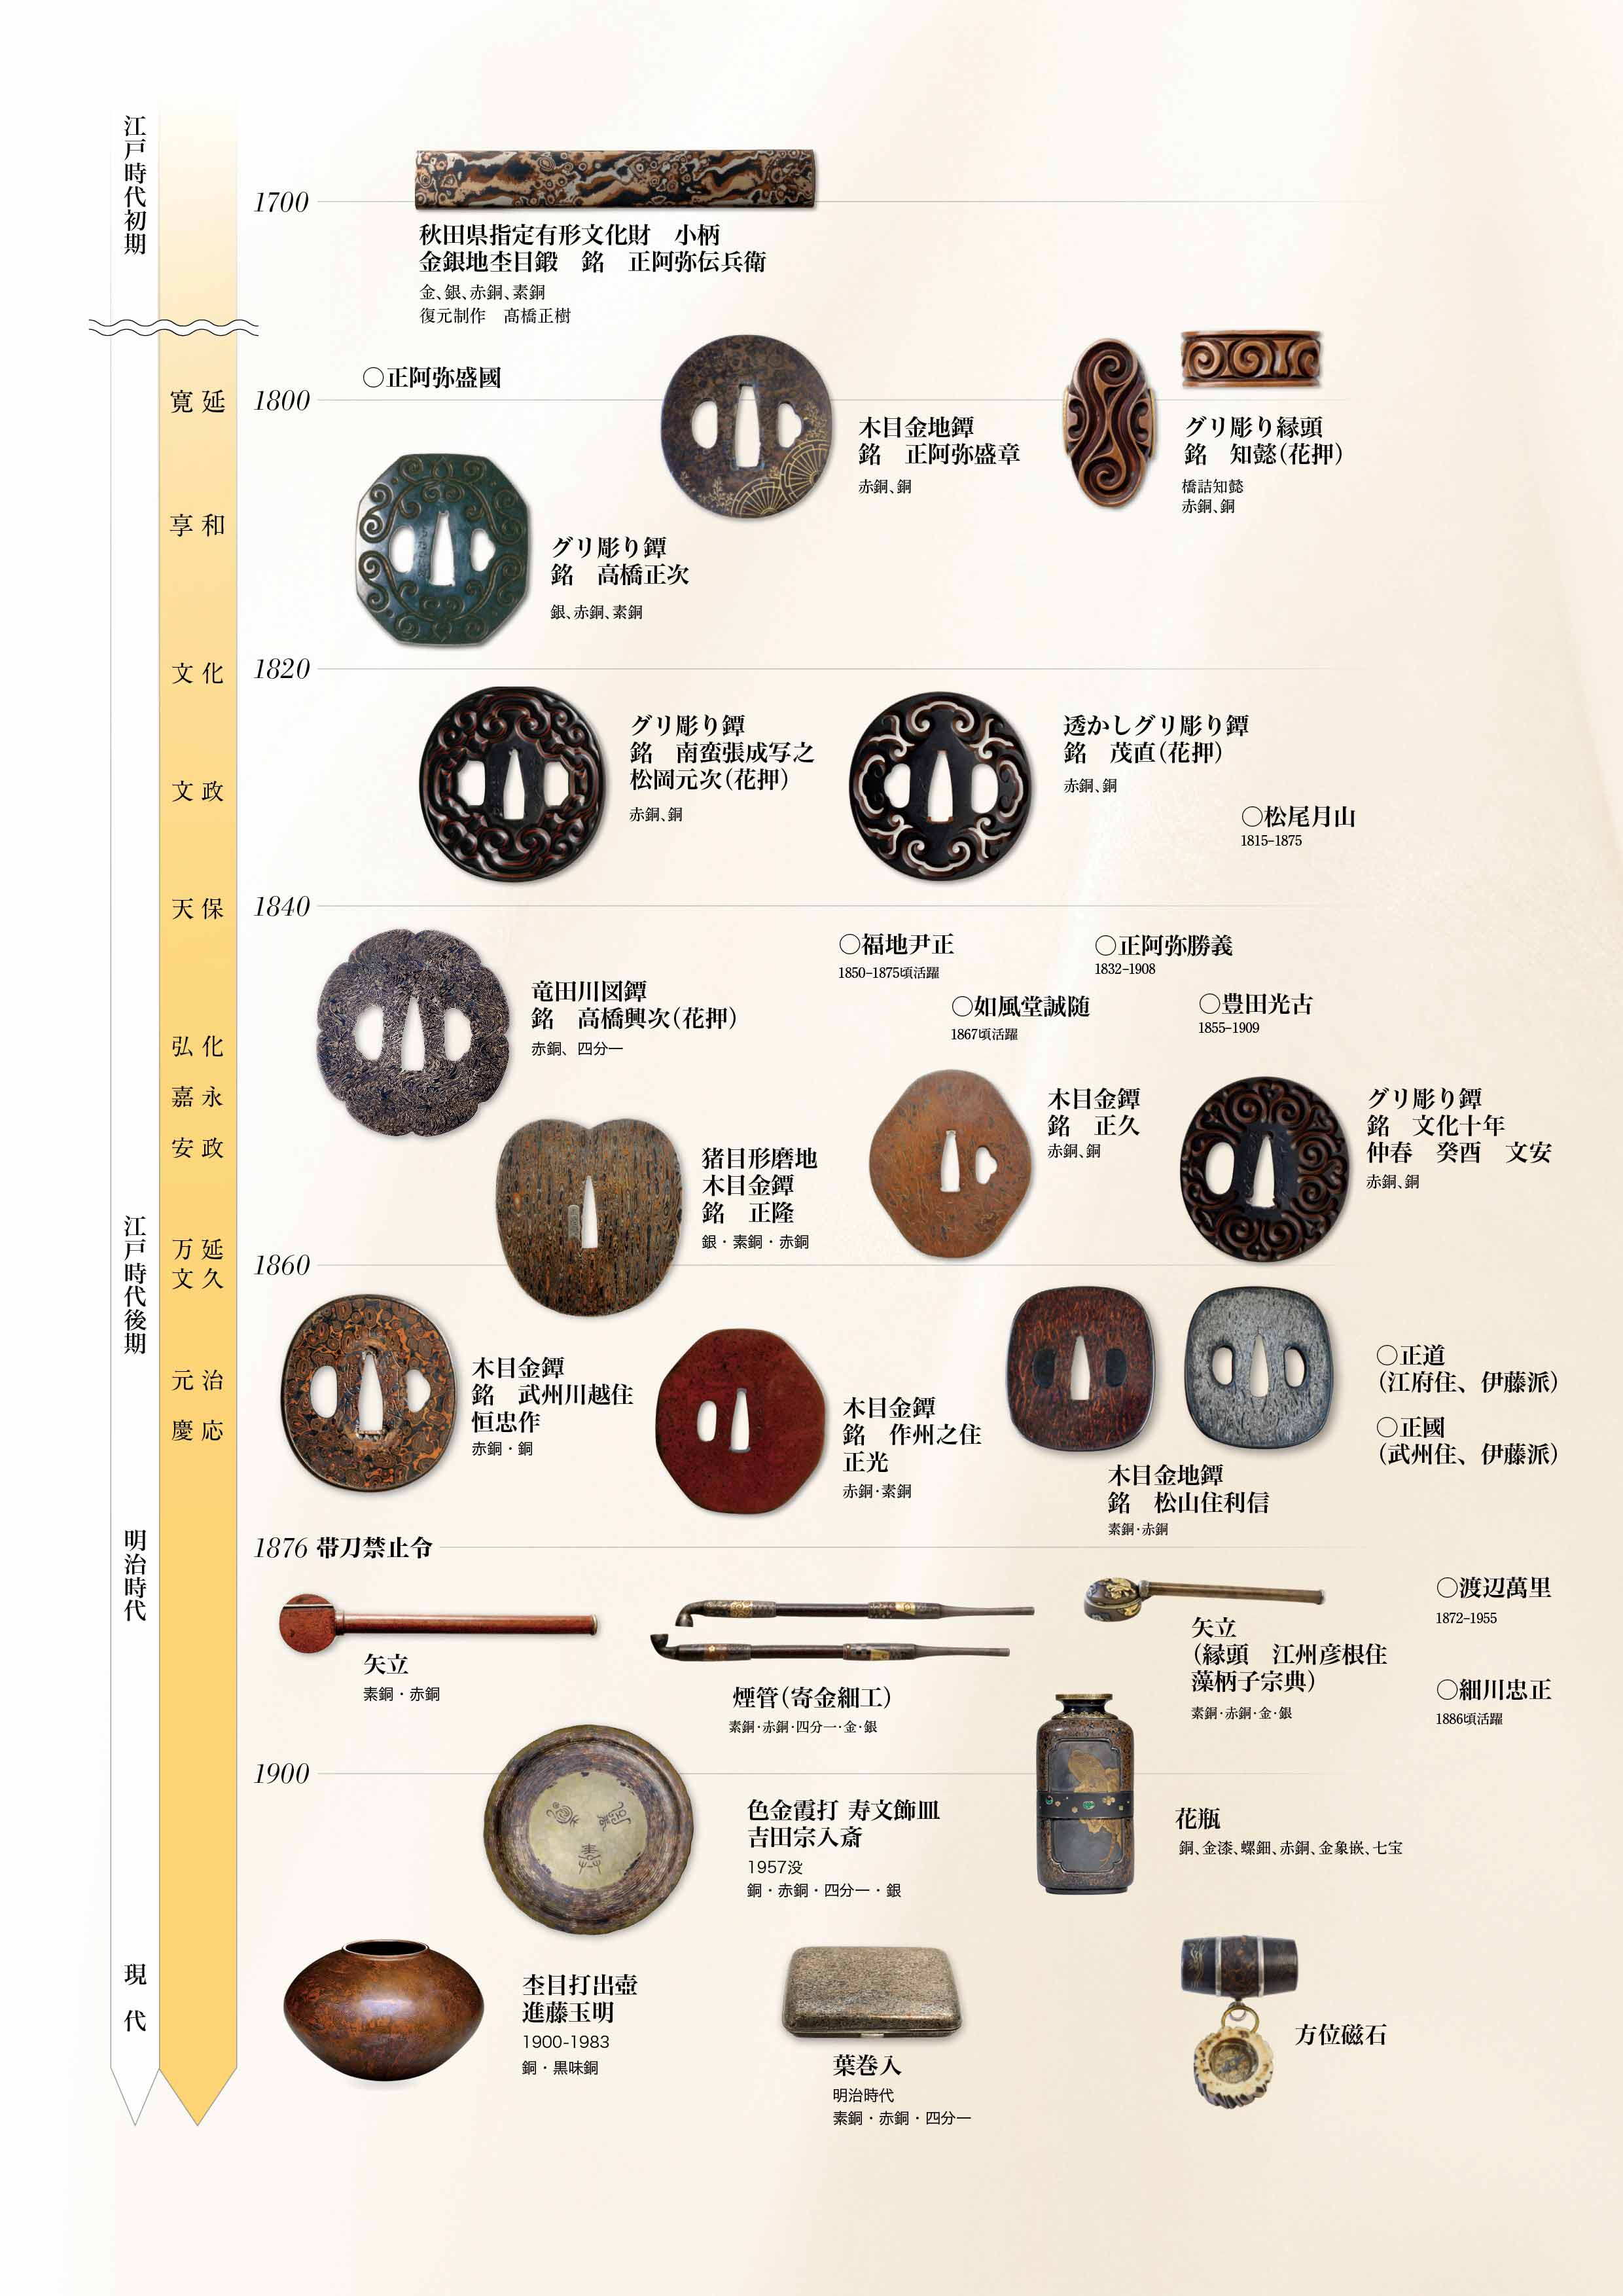 History of Mokume Gane